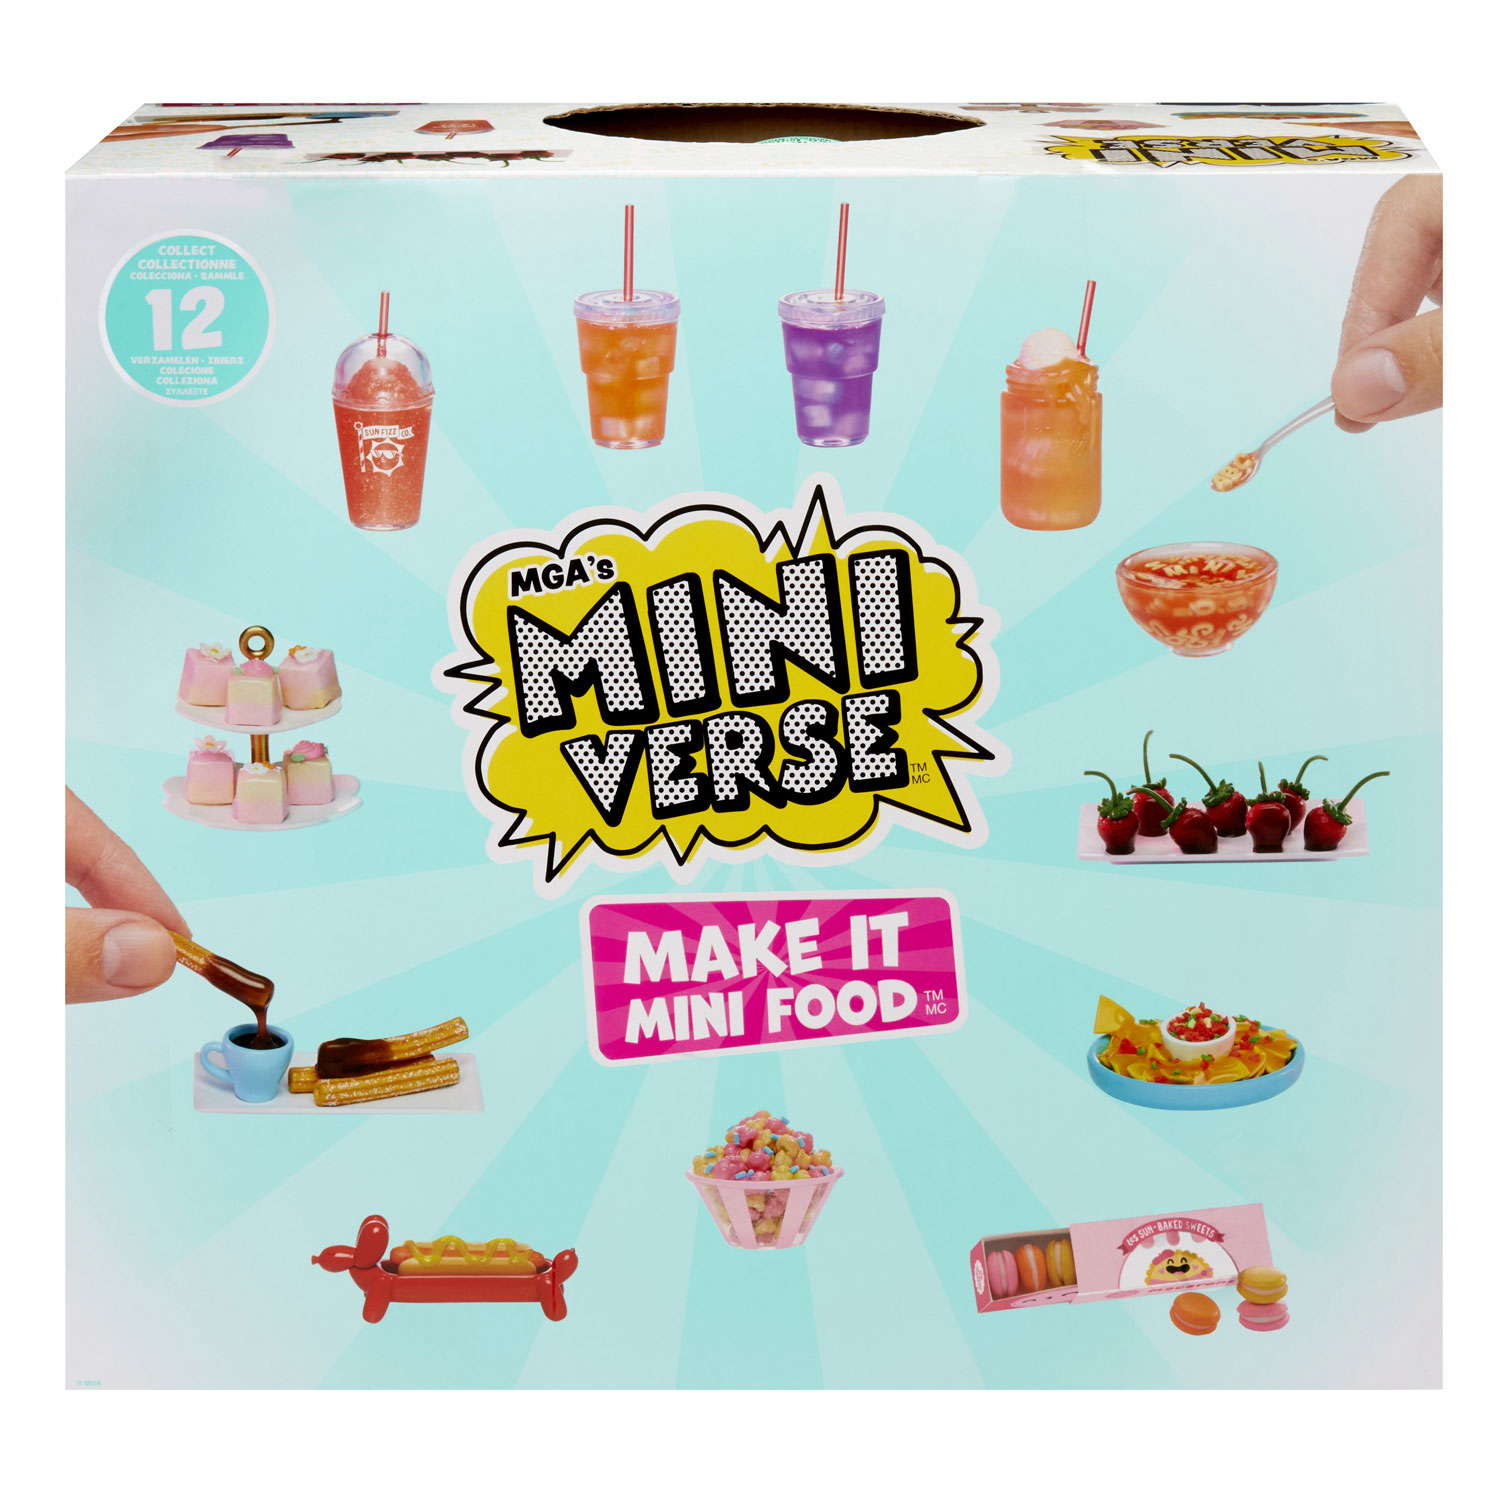 Miniverse Make It Mini Foods Cafe Series